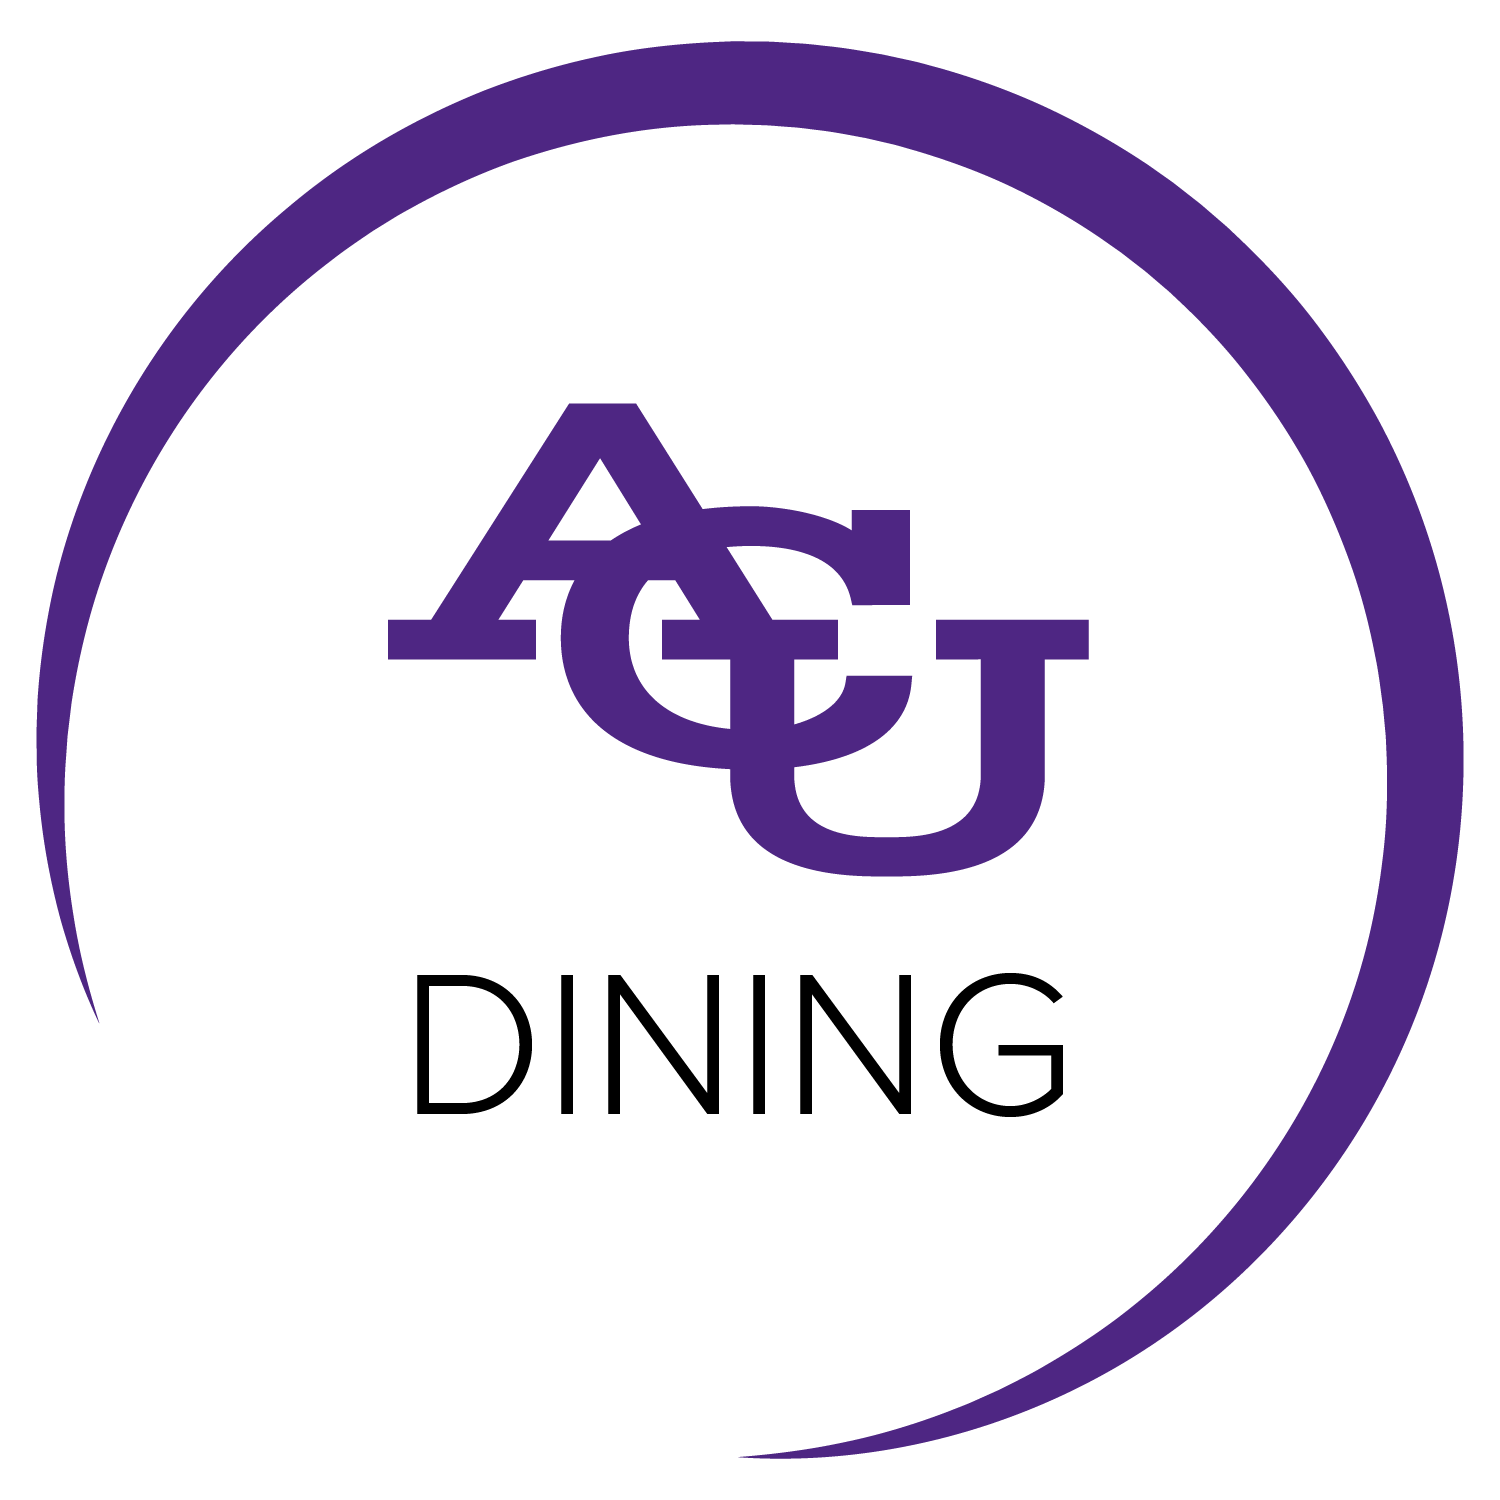 Dining Logo - Dine On Campus at Abilene Christian University